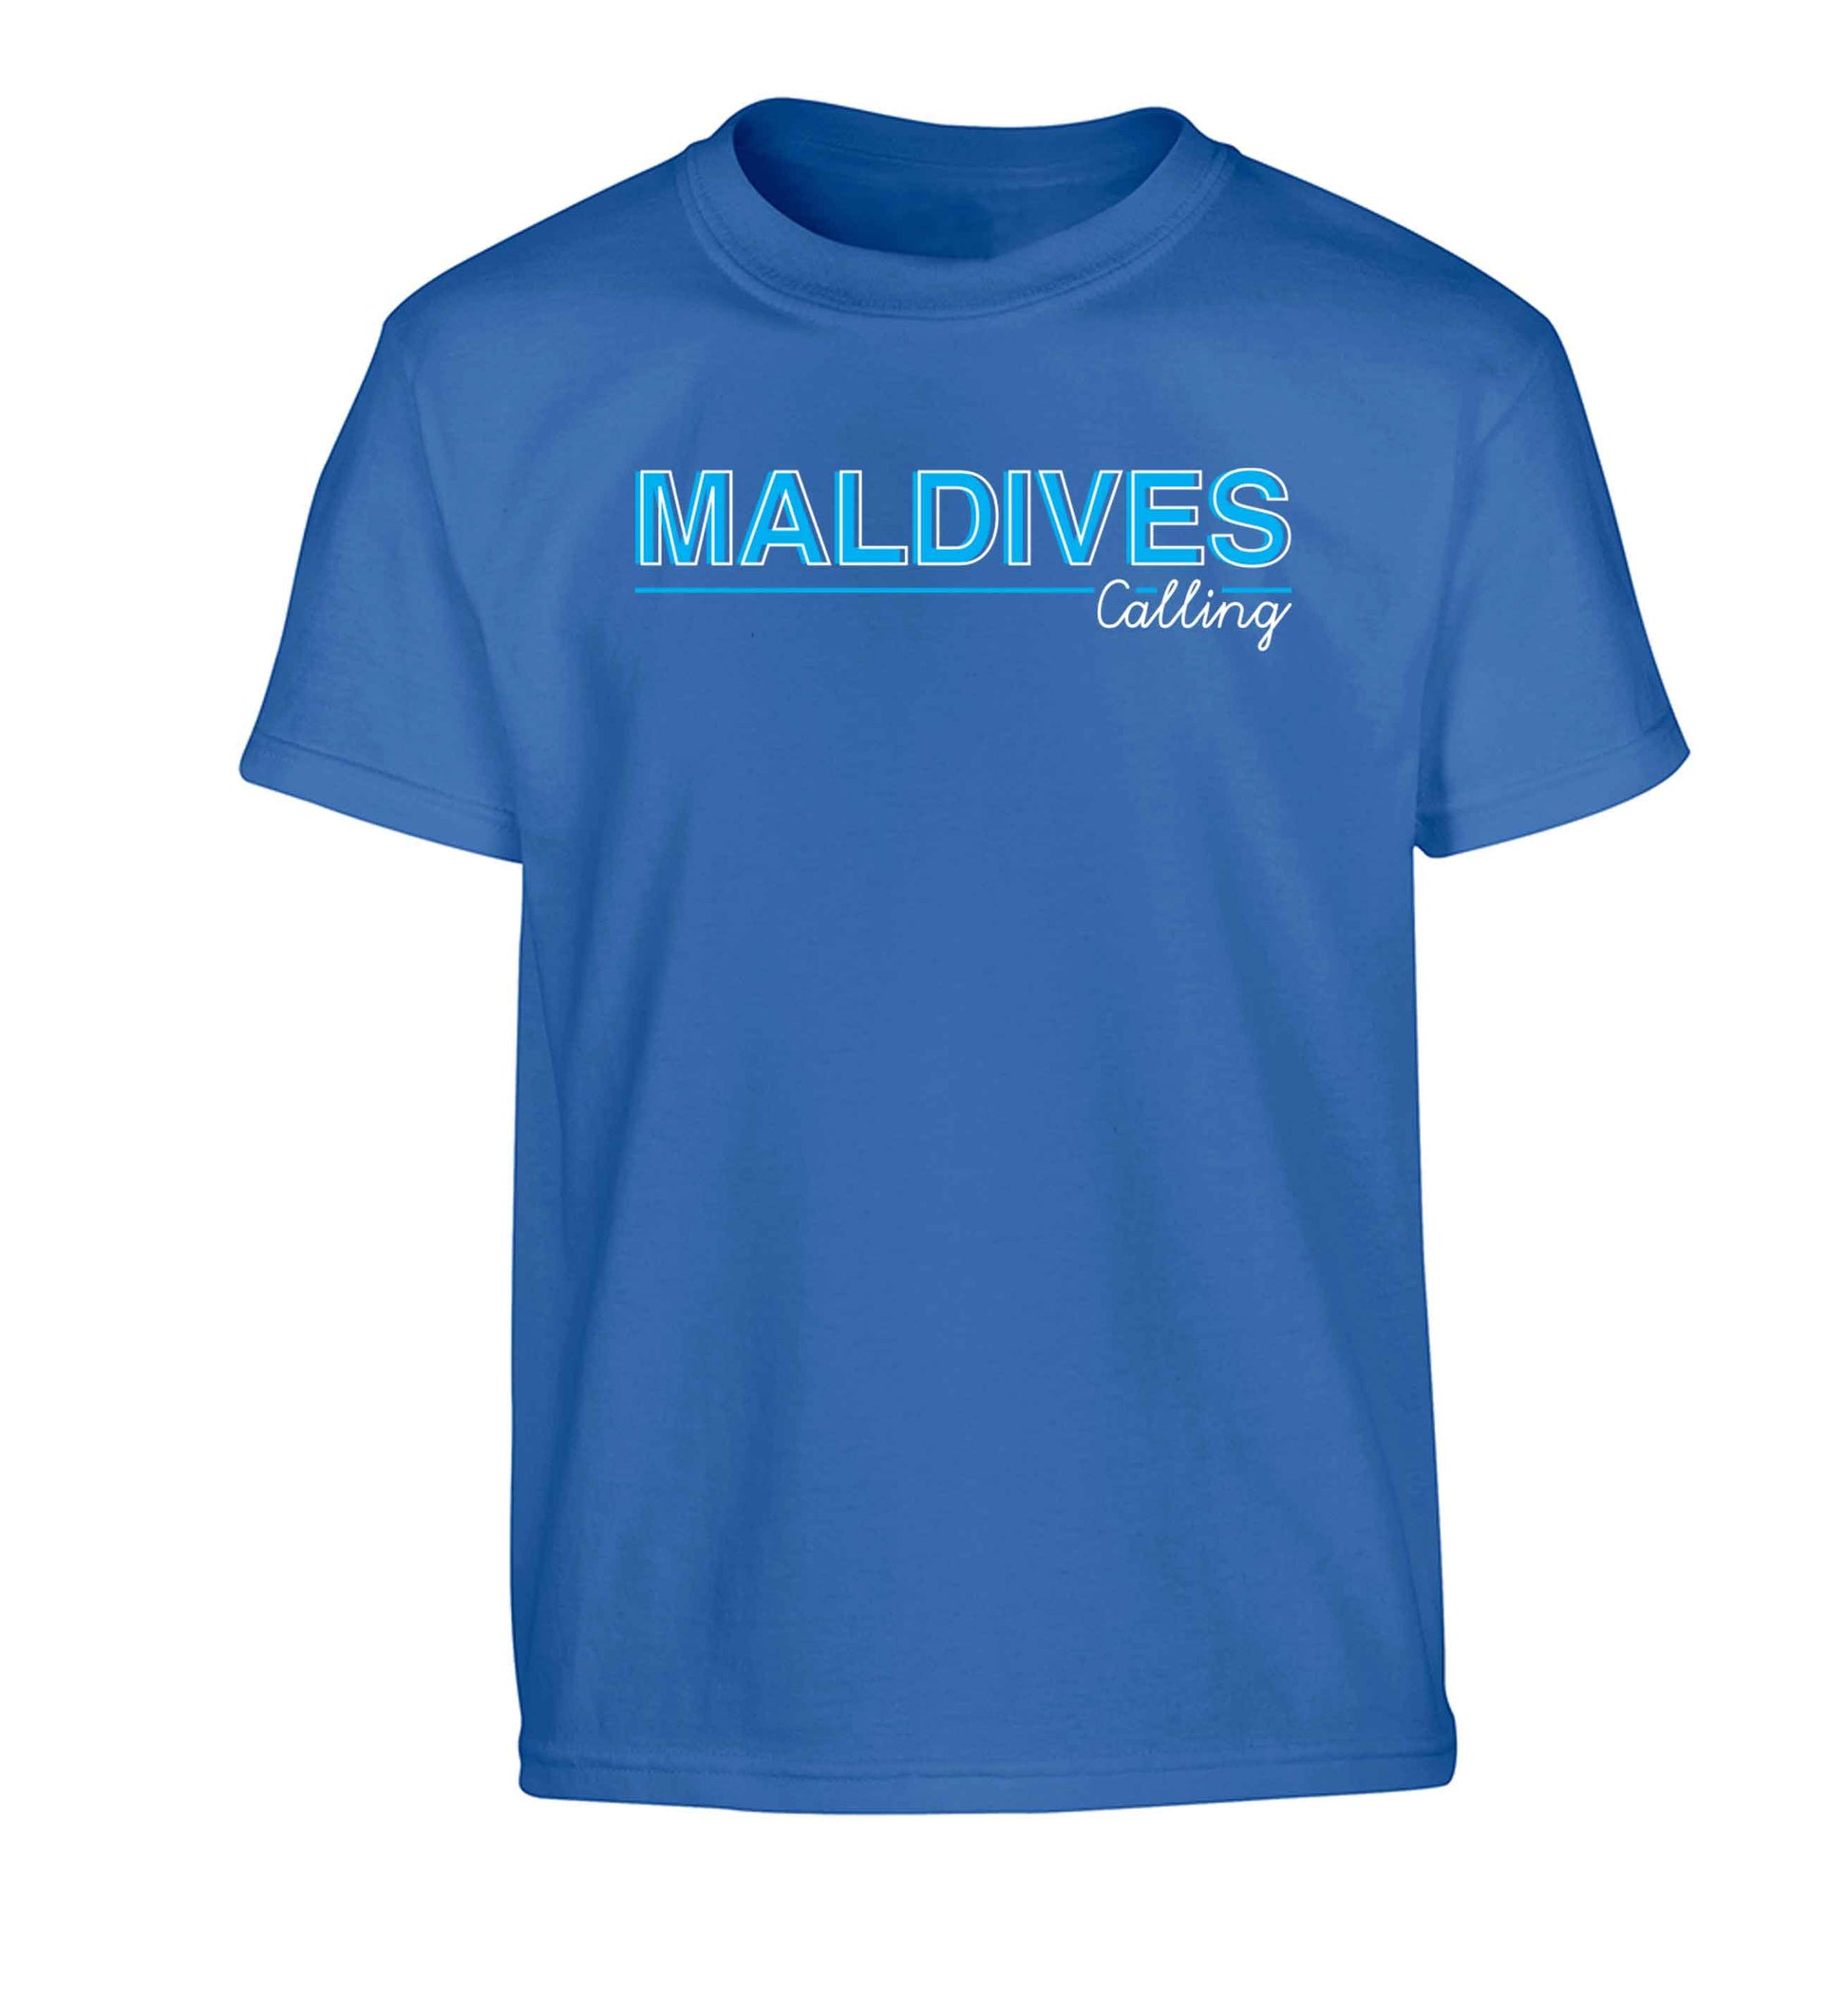 Maldives calling Children's blue Tshirt 12-13 Years